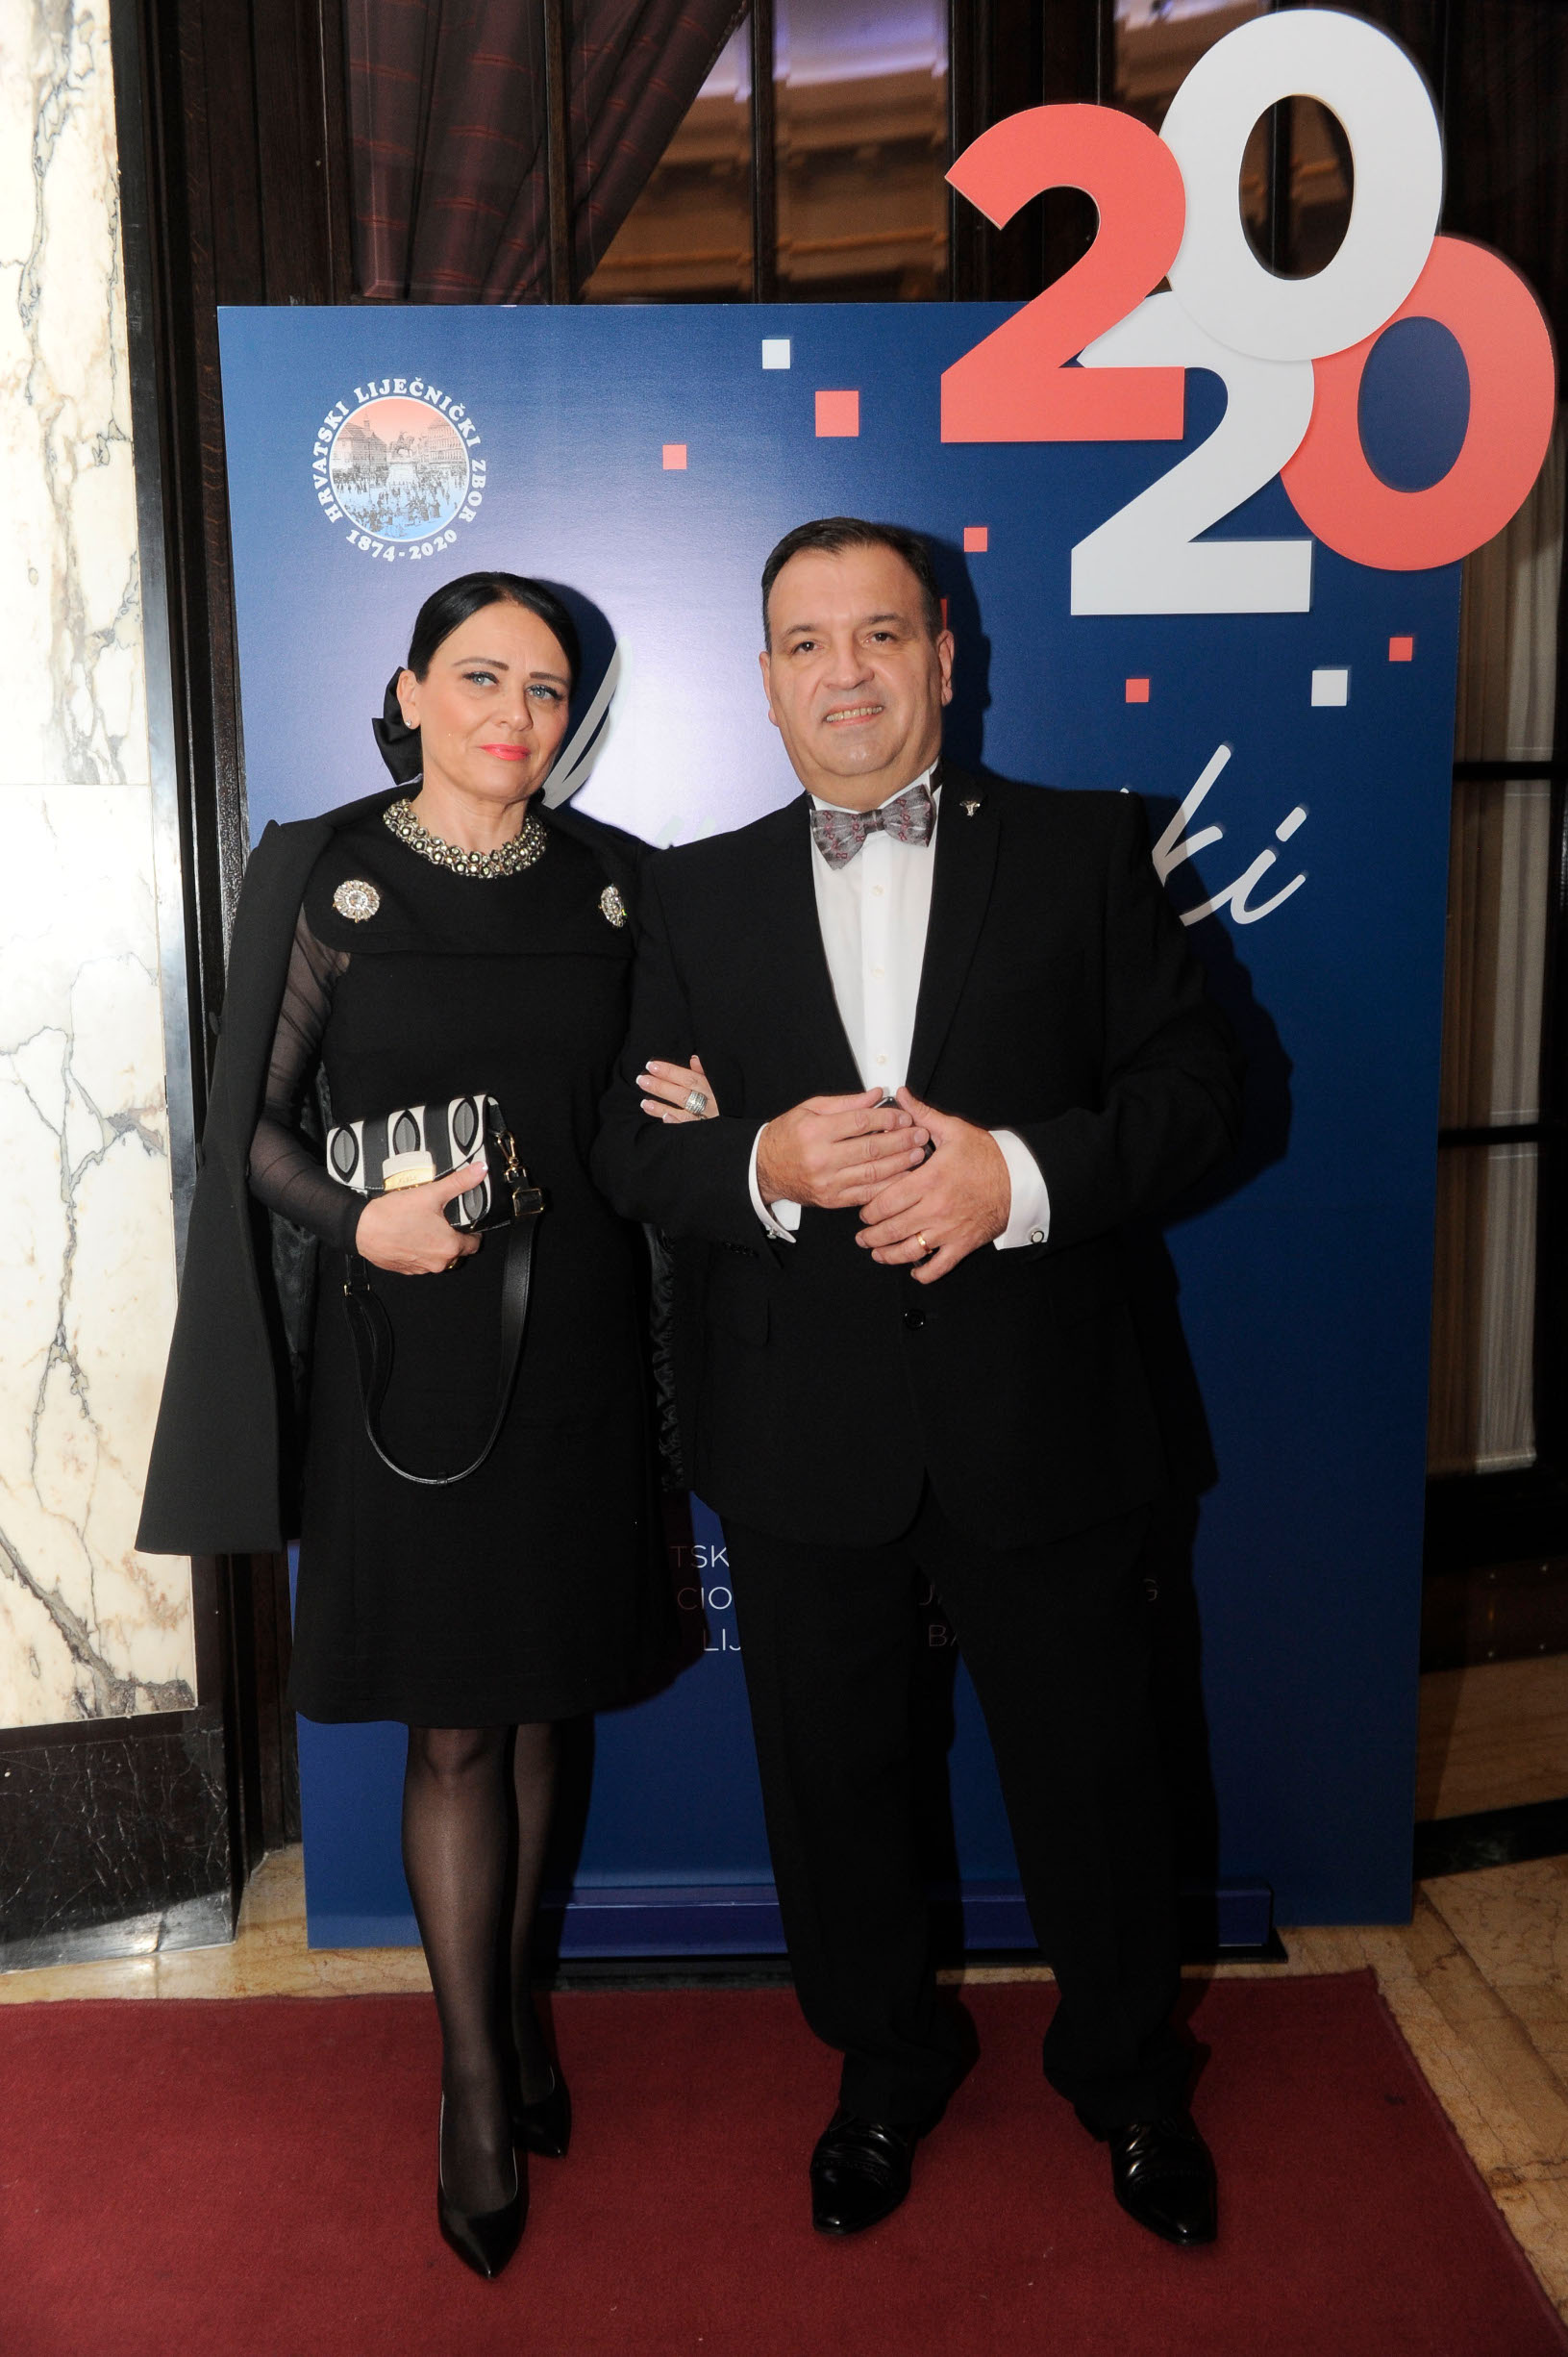 Lijecnicki bal / Hotel Esplanade / Zagreb 29.02.2020. / foto: Maja Jurovic / ministar zdravstva Vili Beros i supruga Jasminka